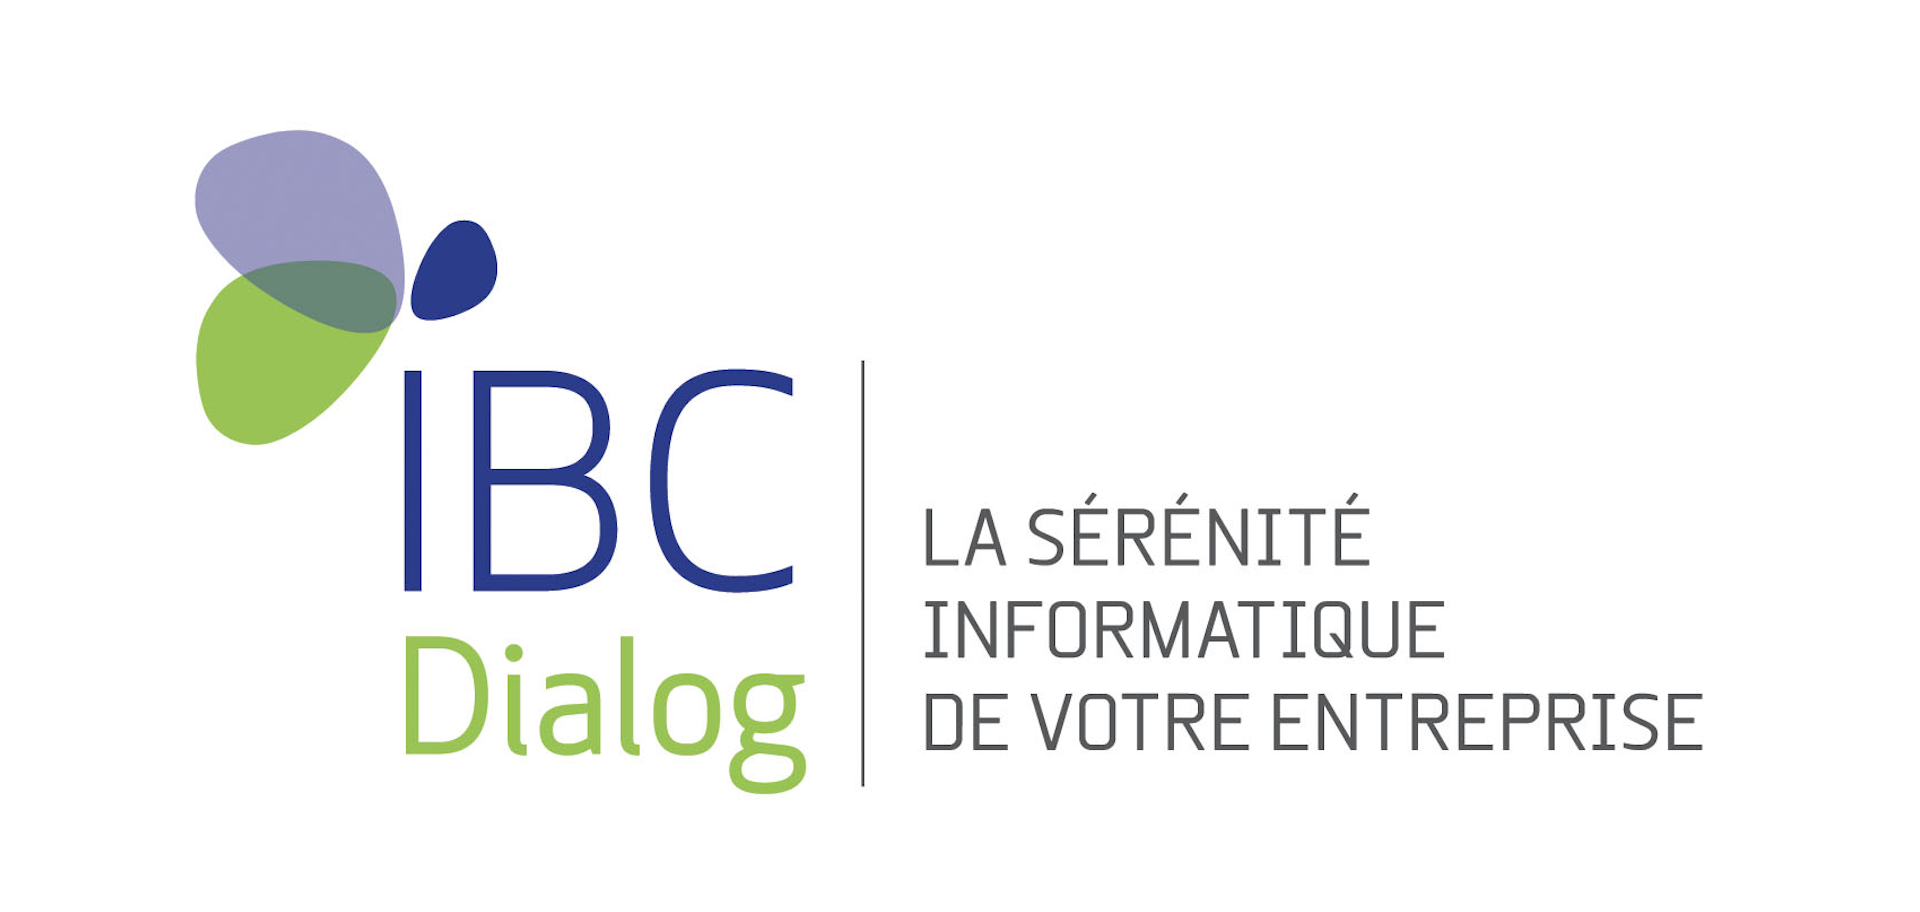 IBC Dialog